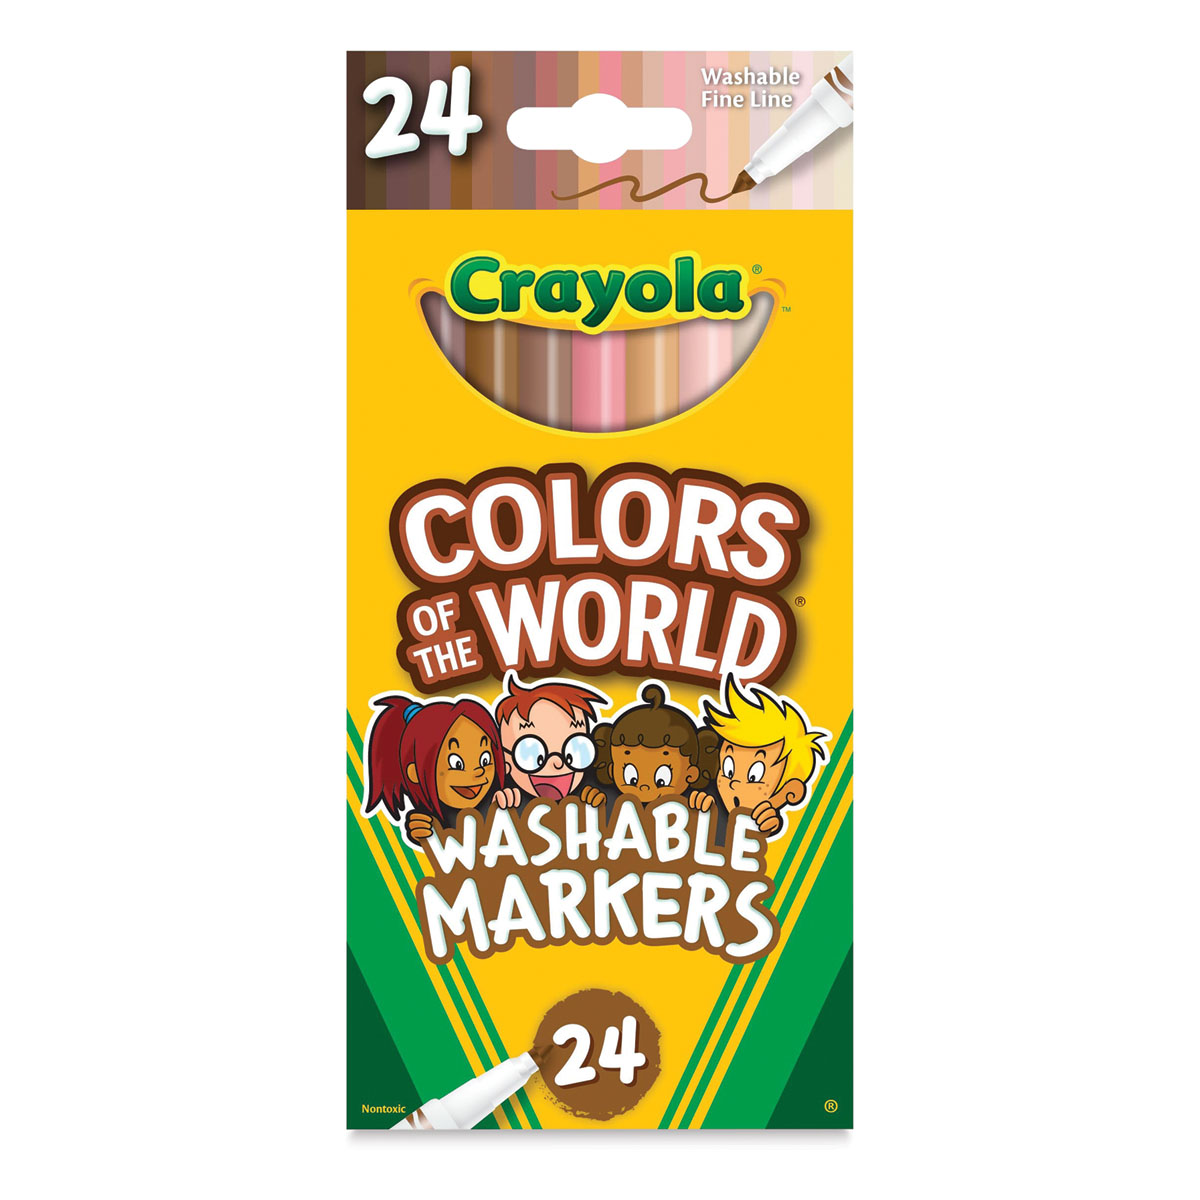 Crayola Crayon Sets – Rileystreet Art Supply